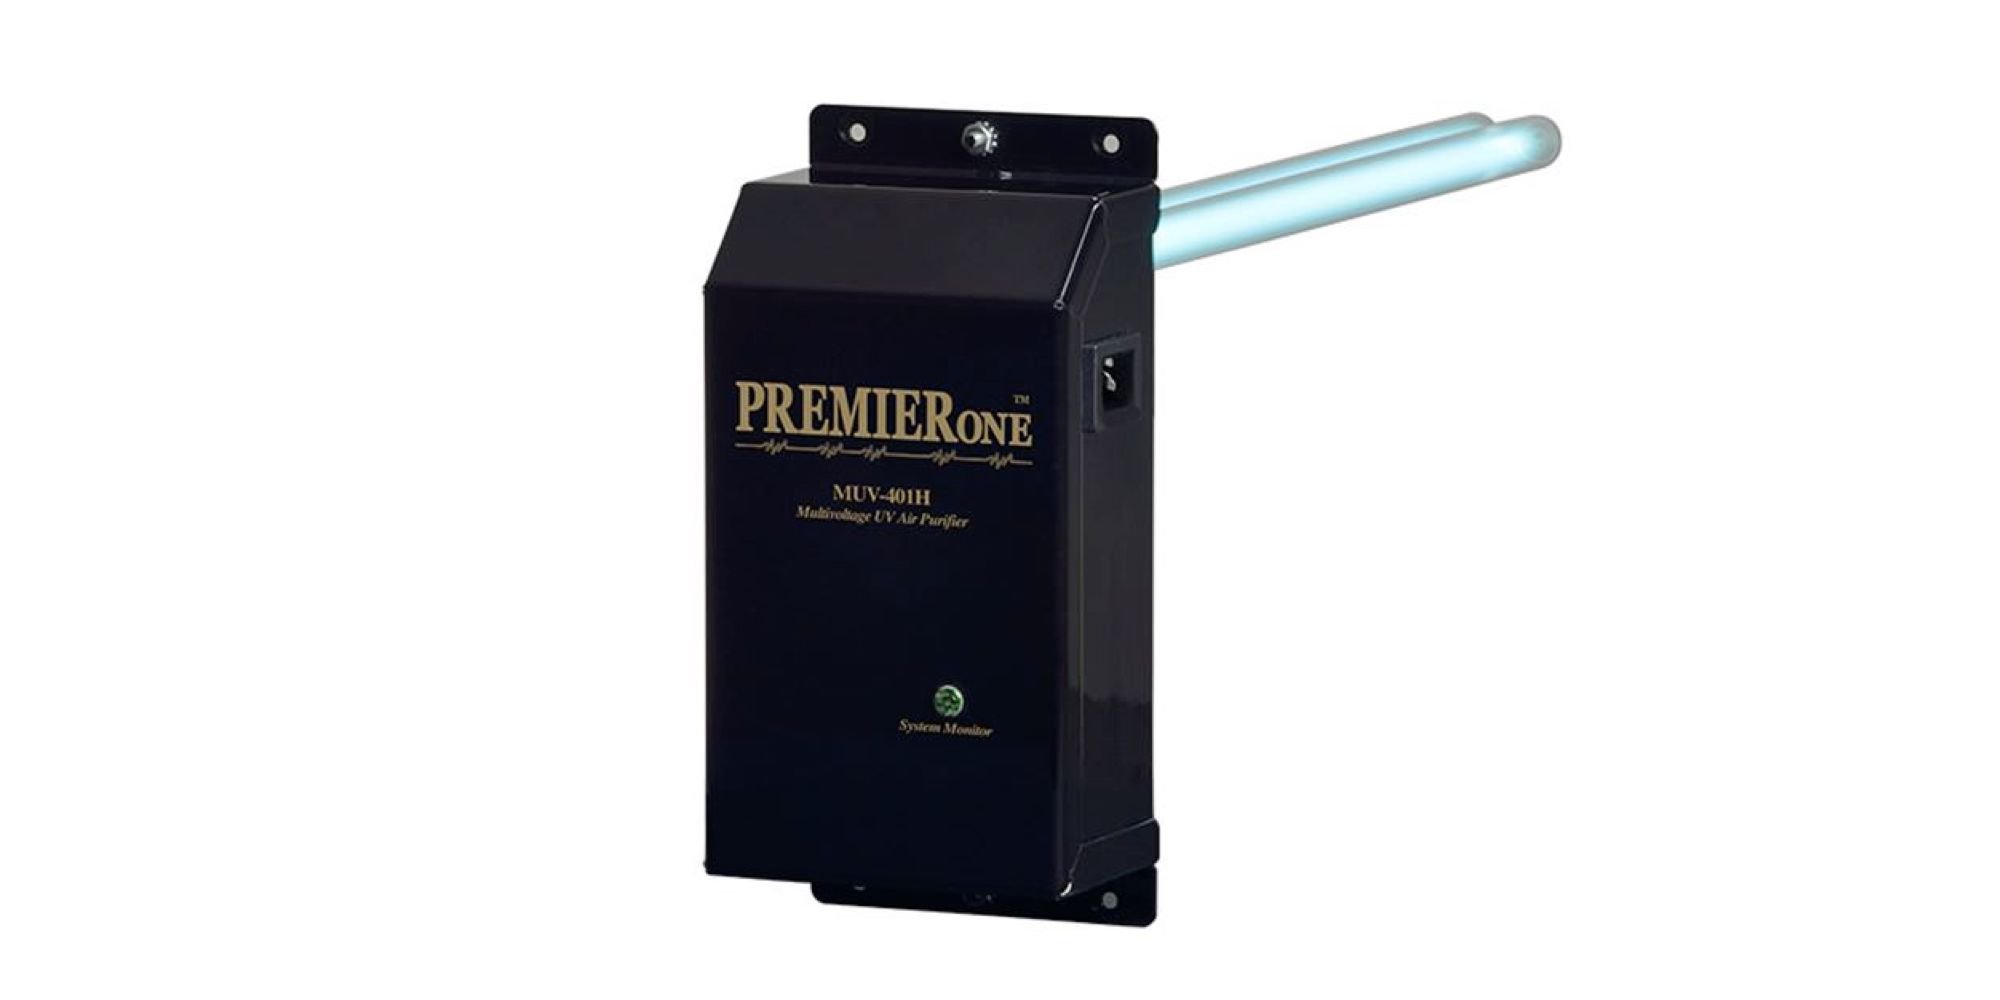 PremierOne Multivoltage UV Germicidal Air Purifier